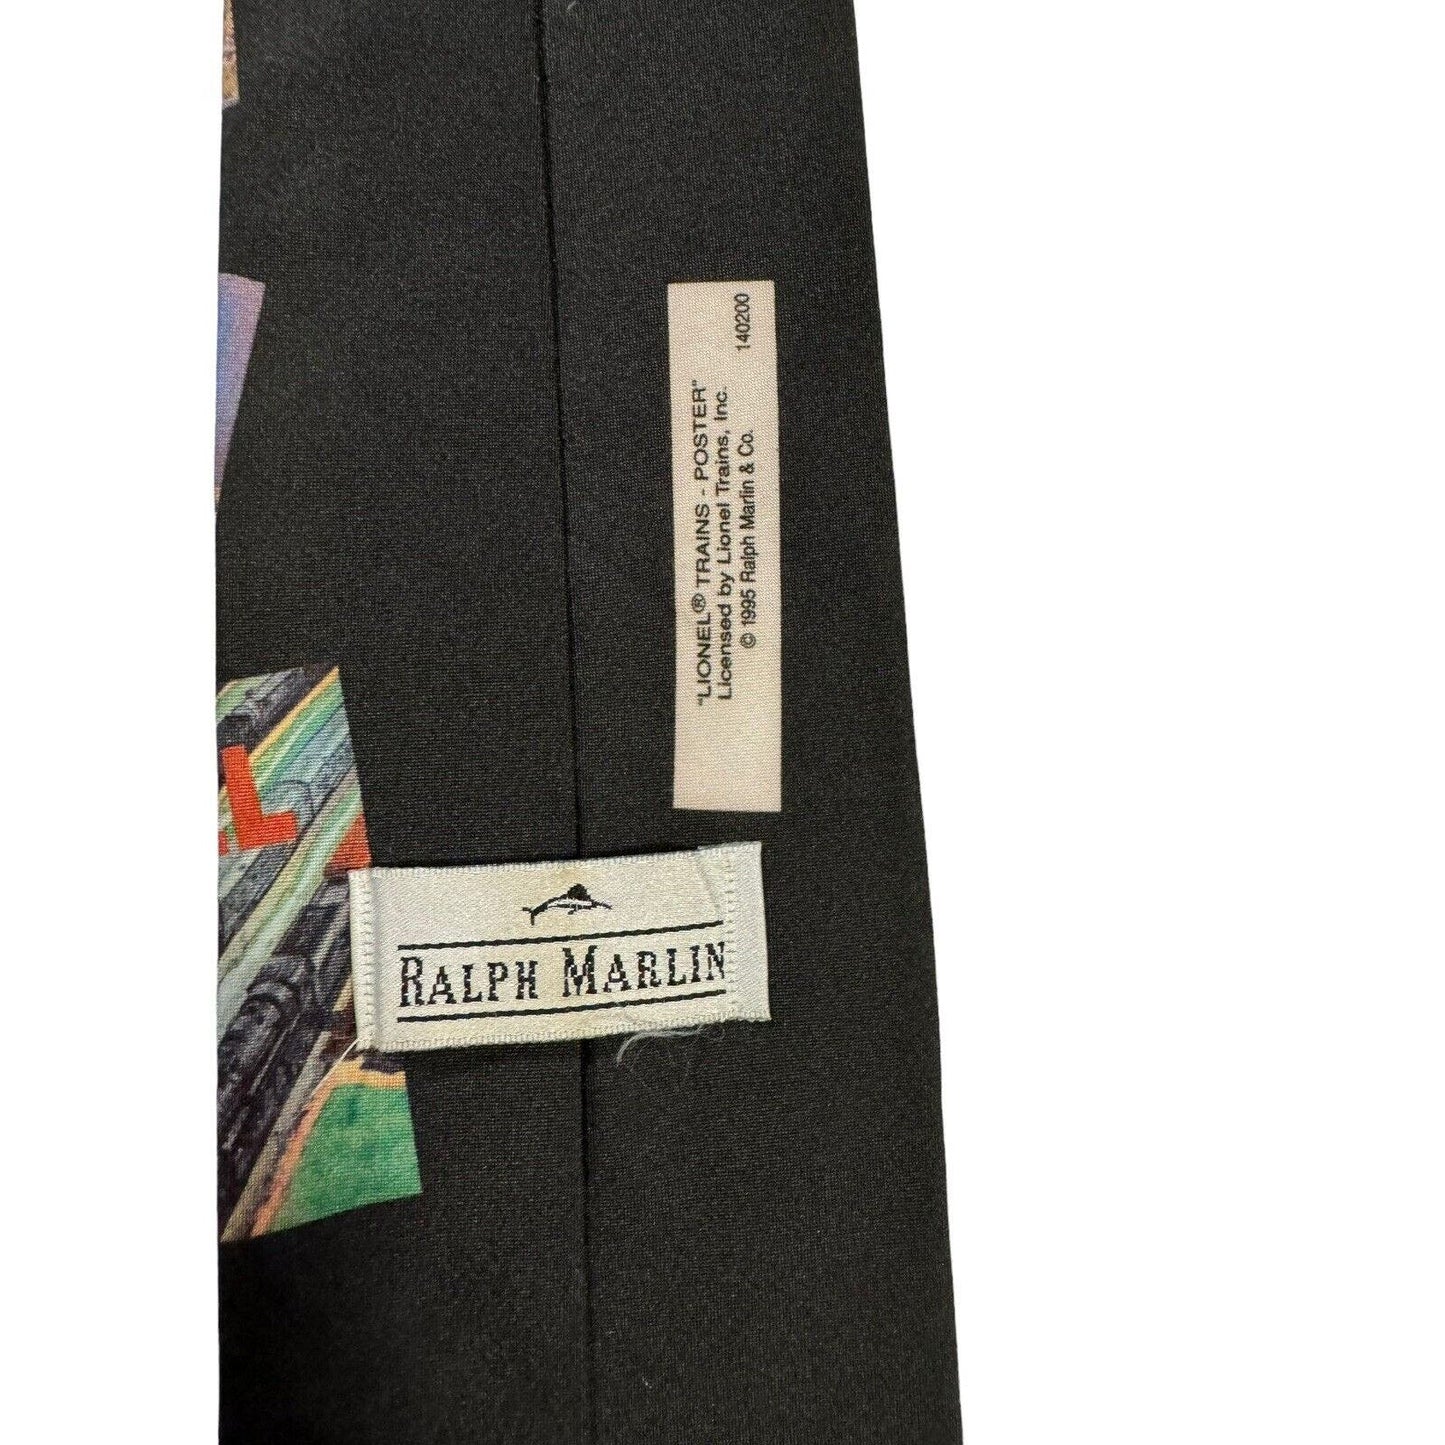 Ralph Marlin Lionel Trains Poster 1995 Vintage Novelty Necktie Polyester